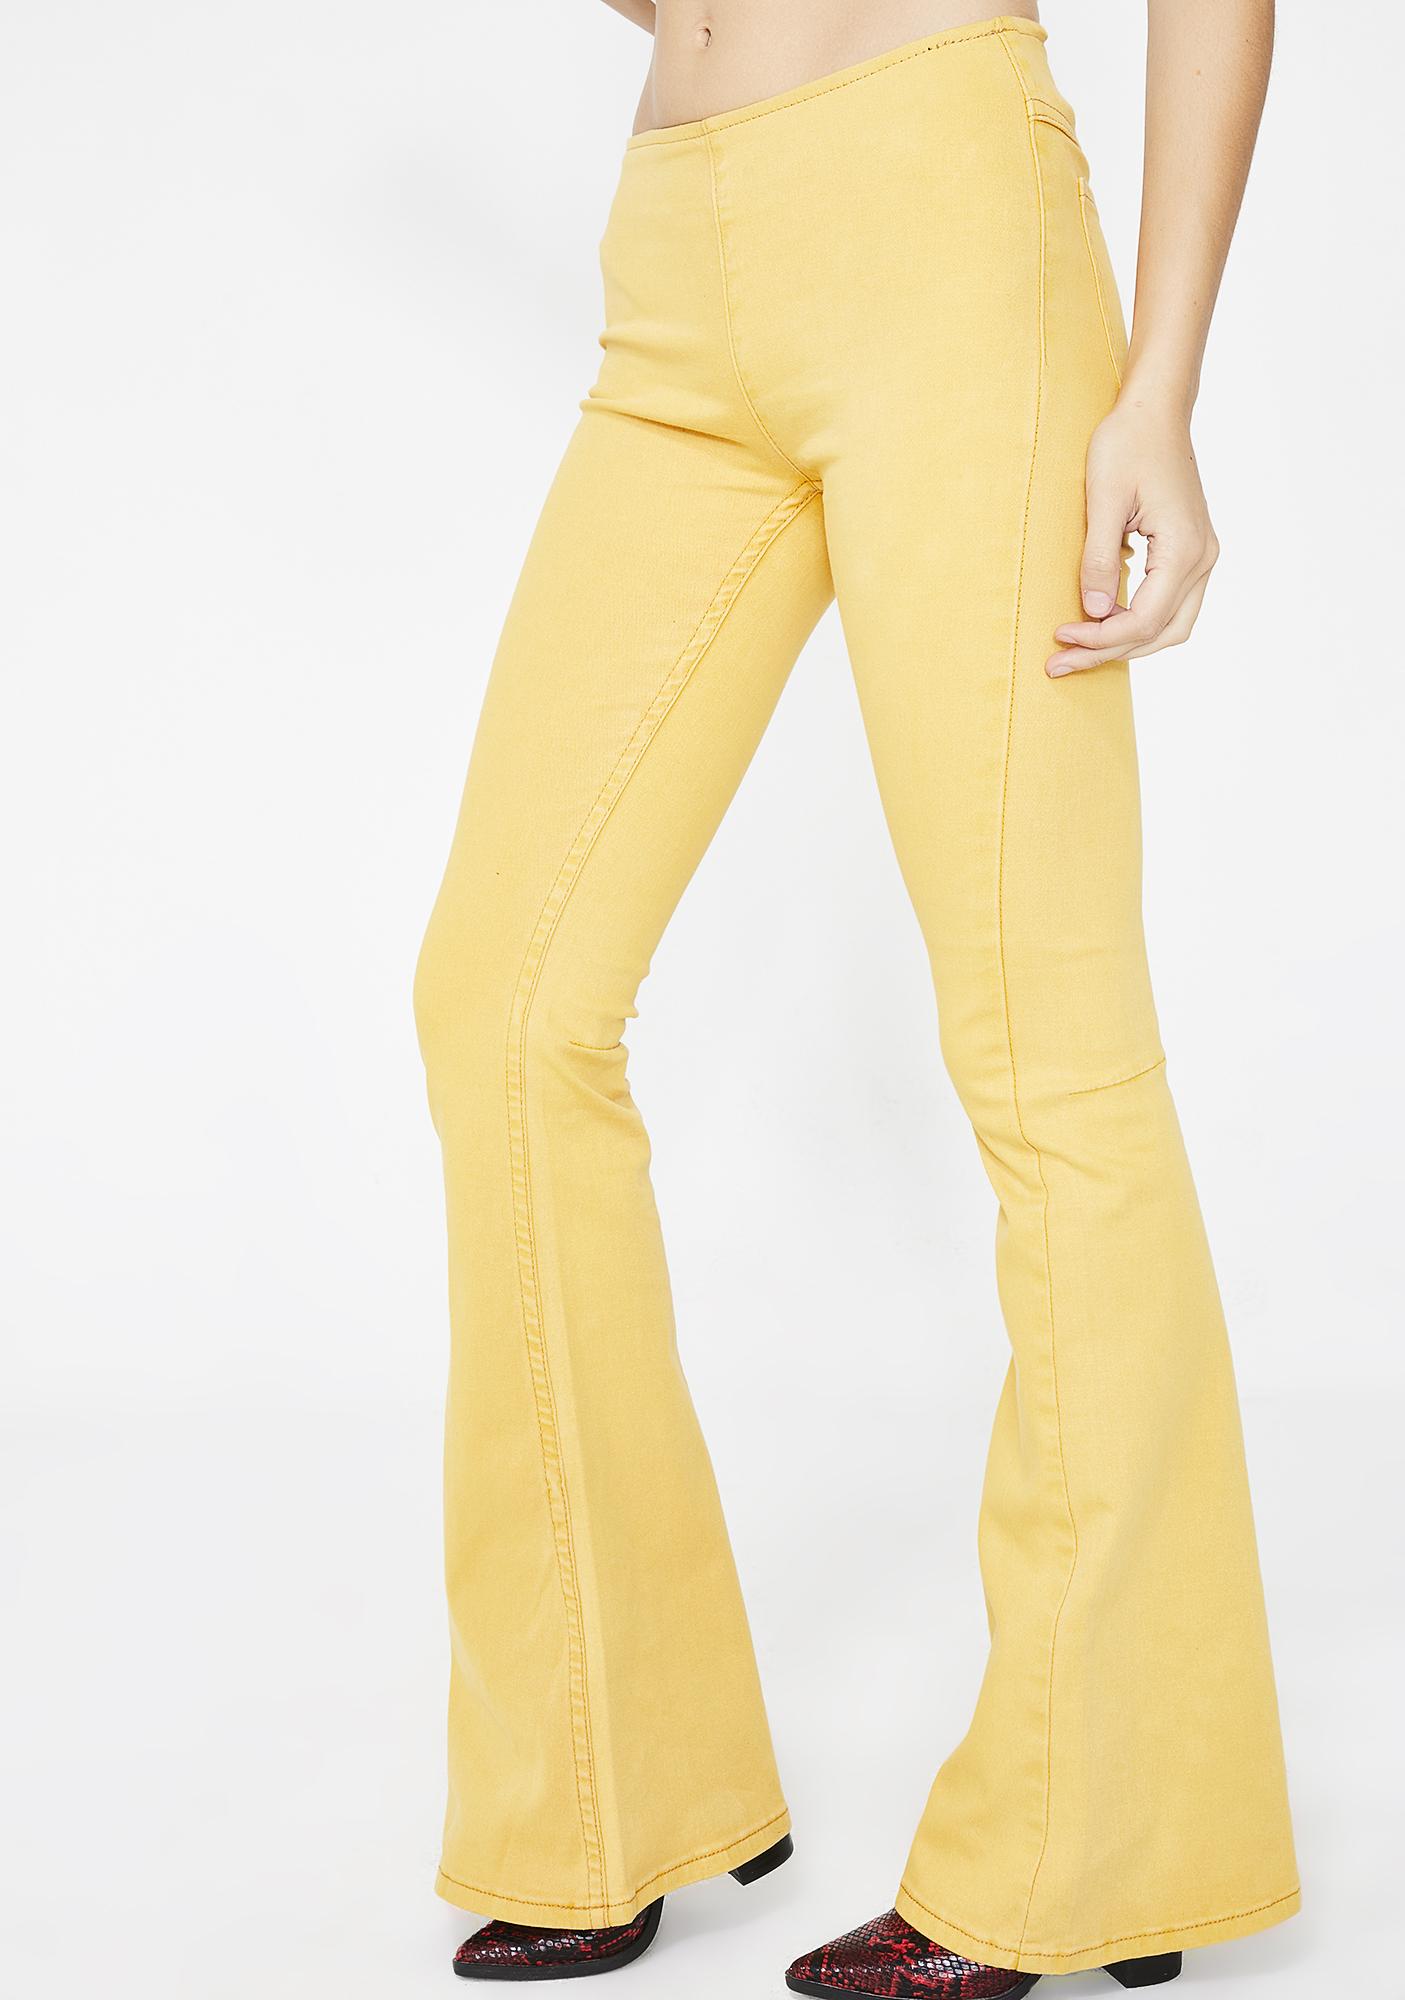 flare pants yellow